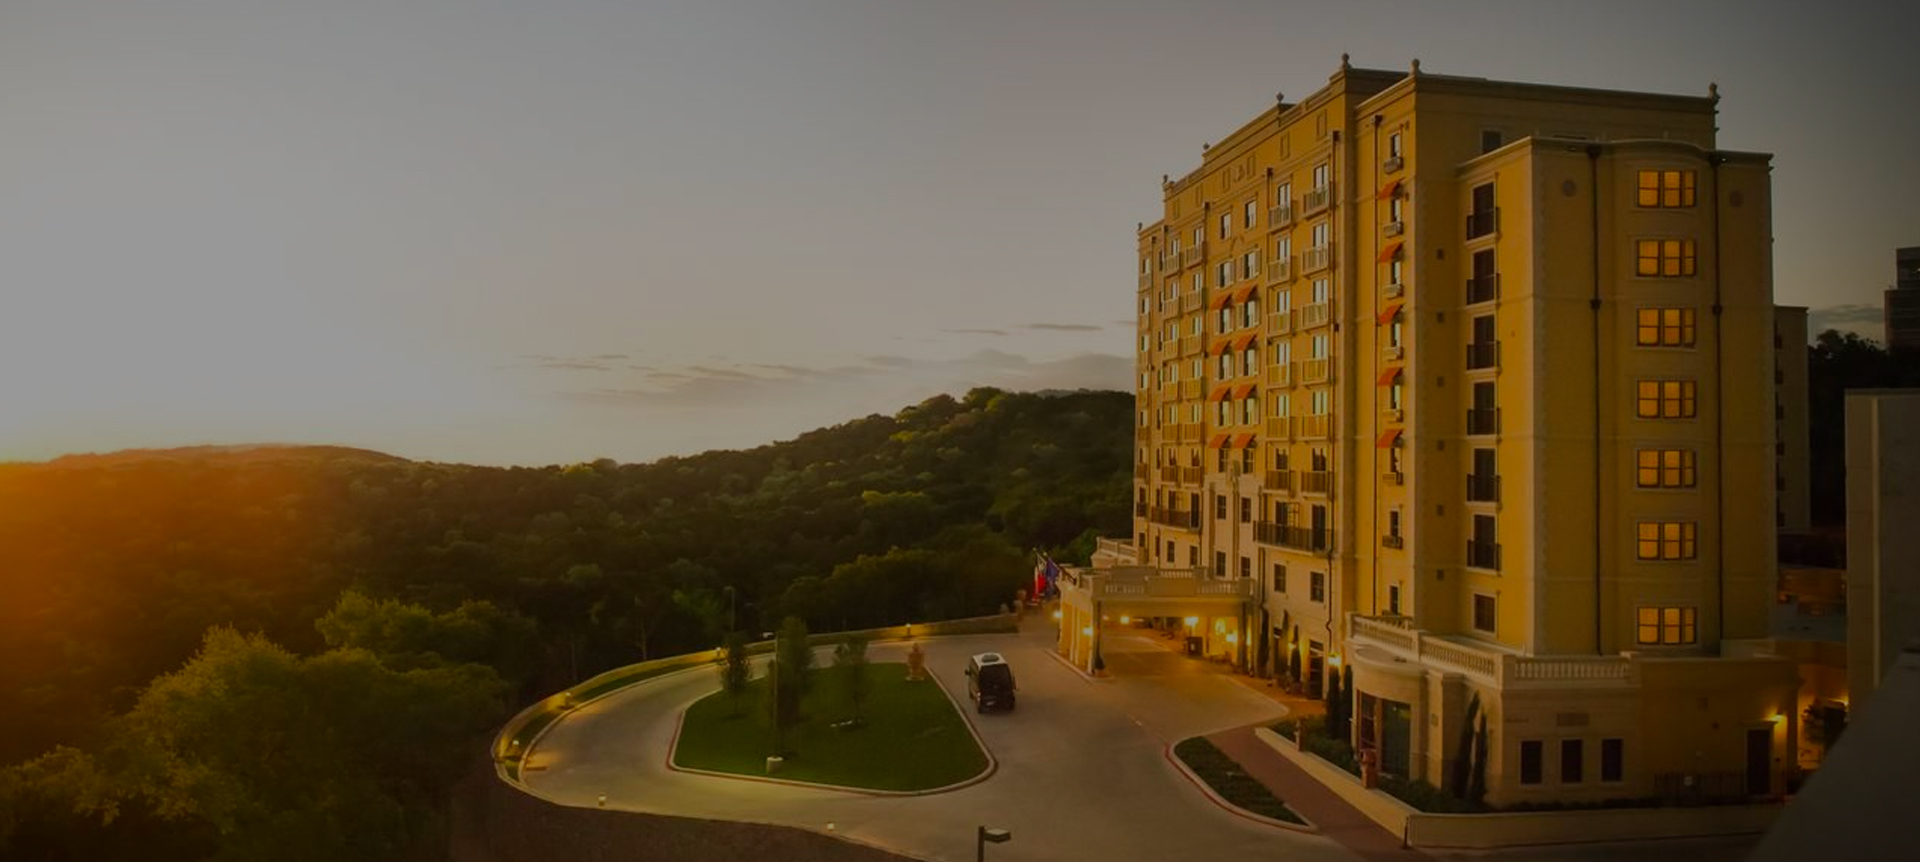 exterior view of hotel granduca at sunset